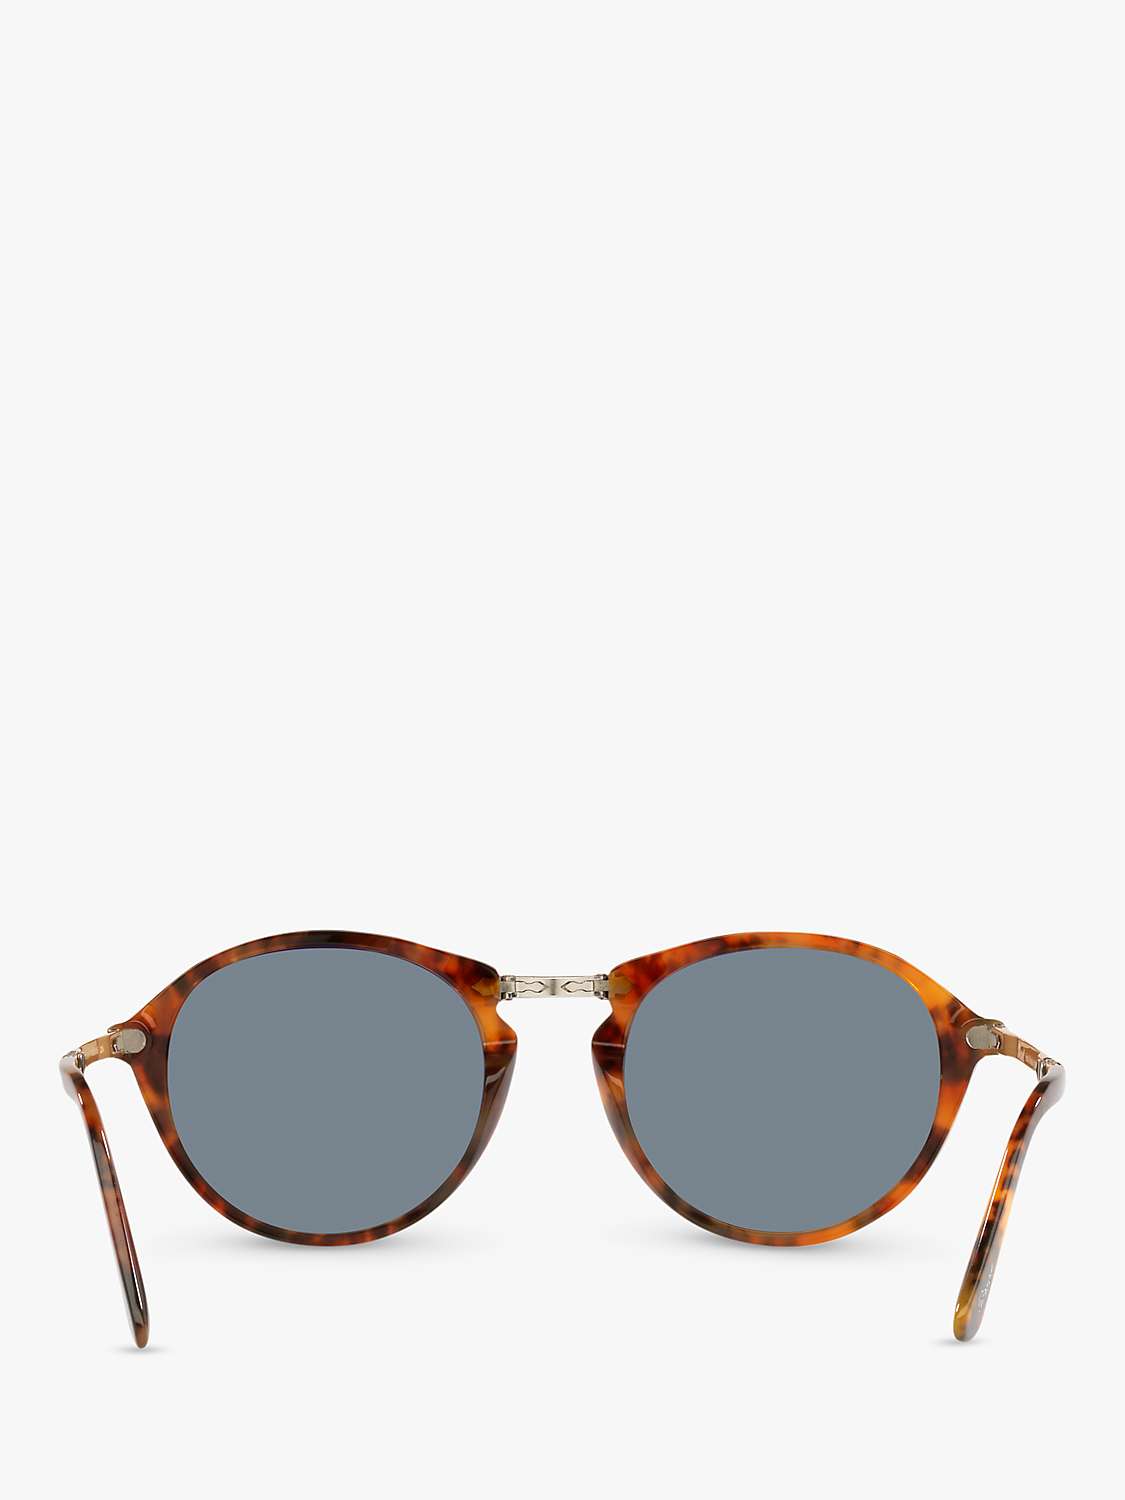 Buy Persol PO3274S Unisex Oval Sunglasses, Havana/Blue Online at johnlewis.com